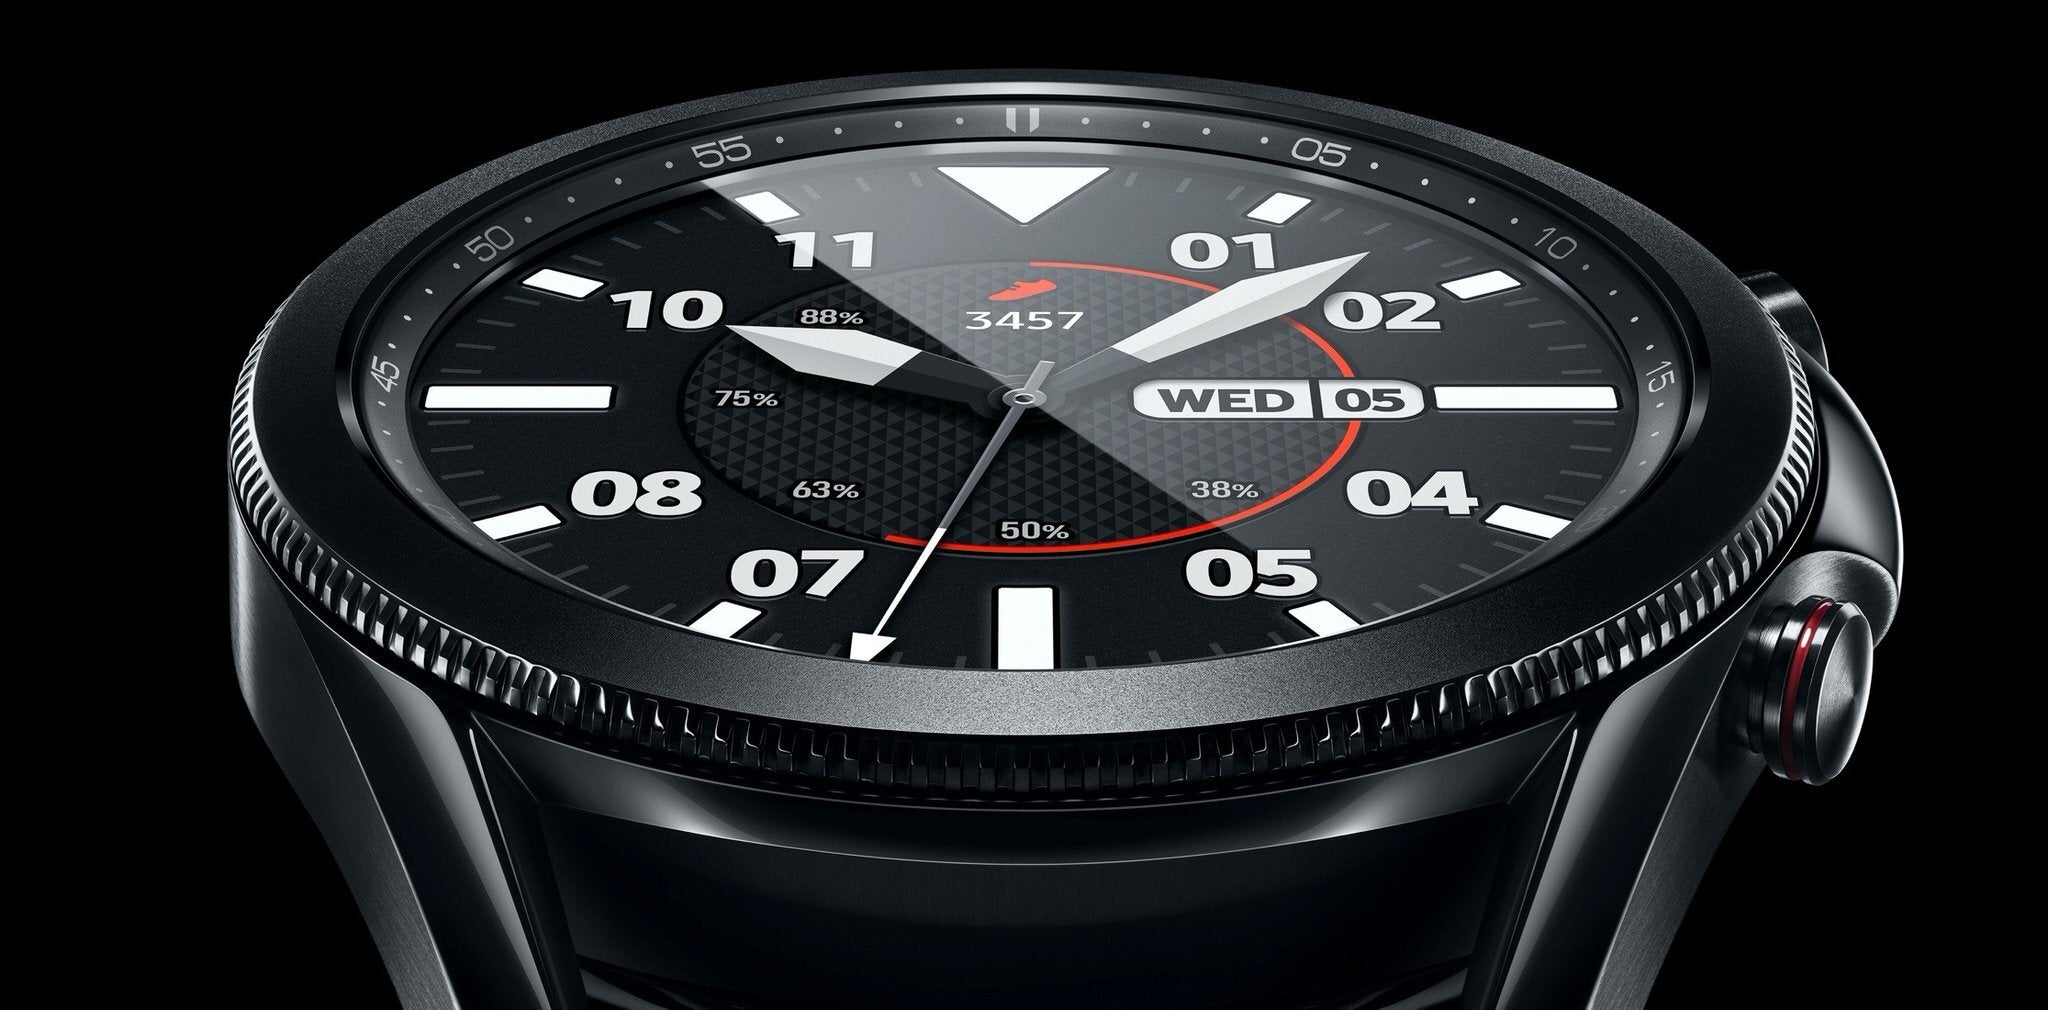 Samsung Galaxy Watch 3 45 mm - New leak gives us another look at the Samsung Galaxy Watch 3 and its specs